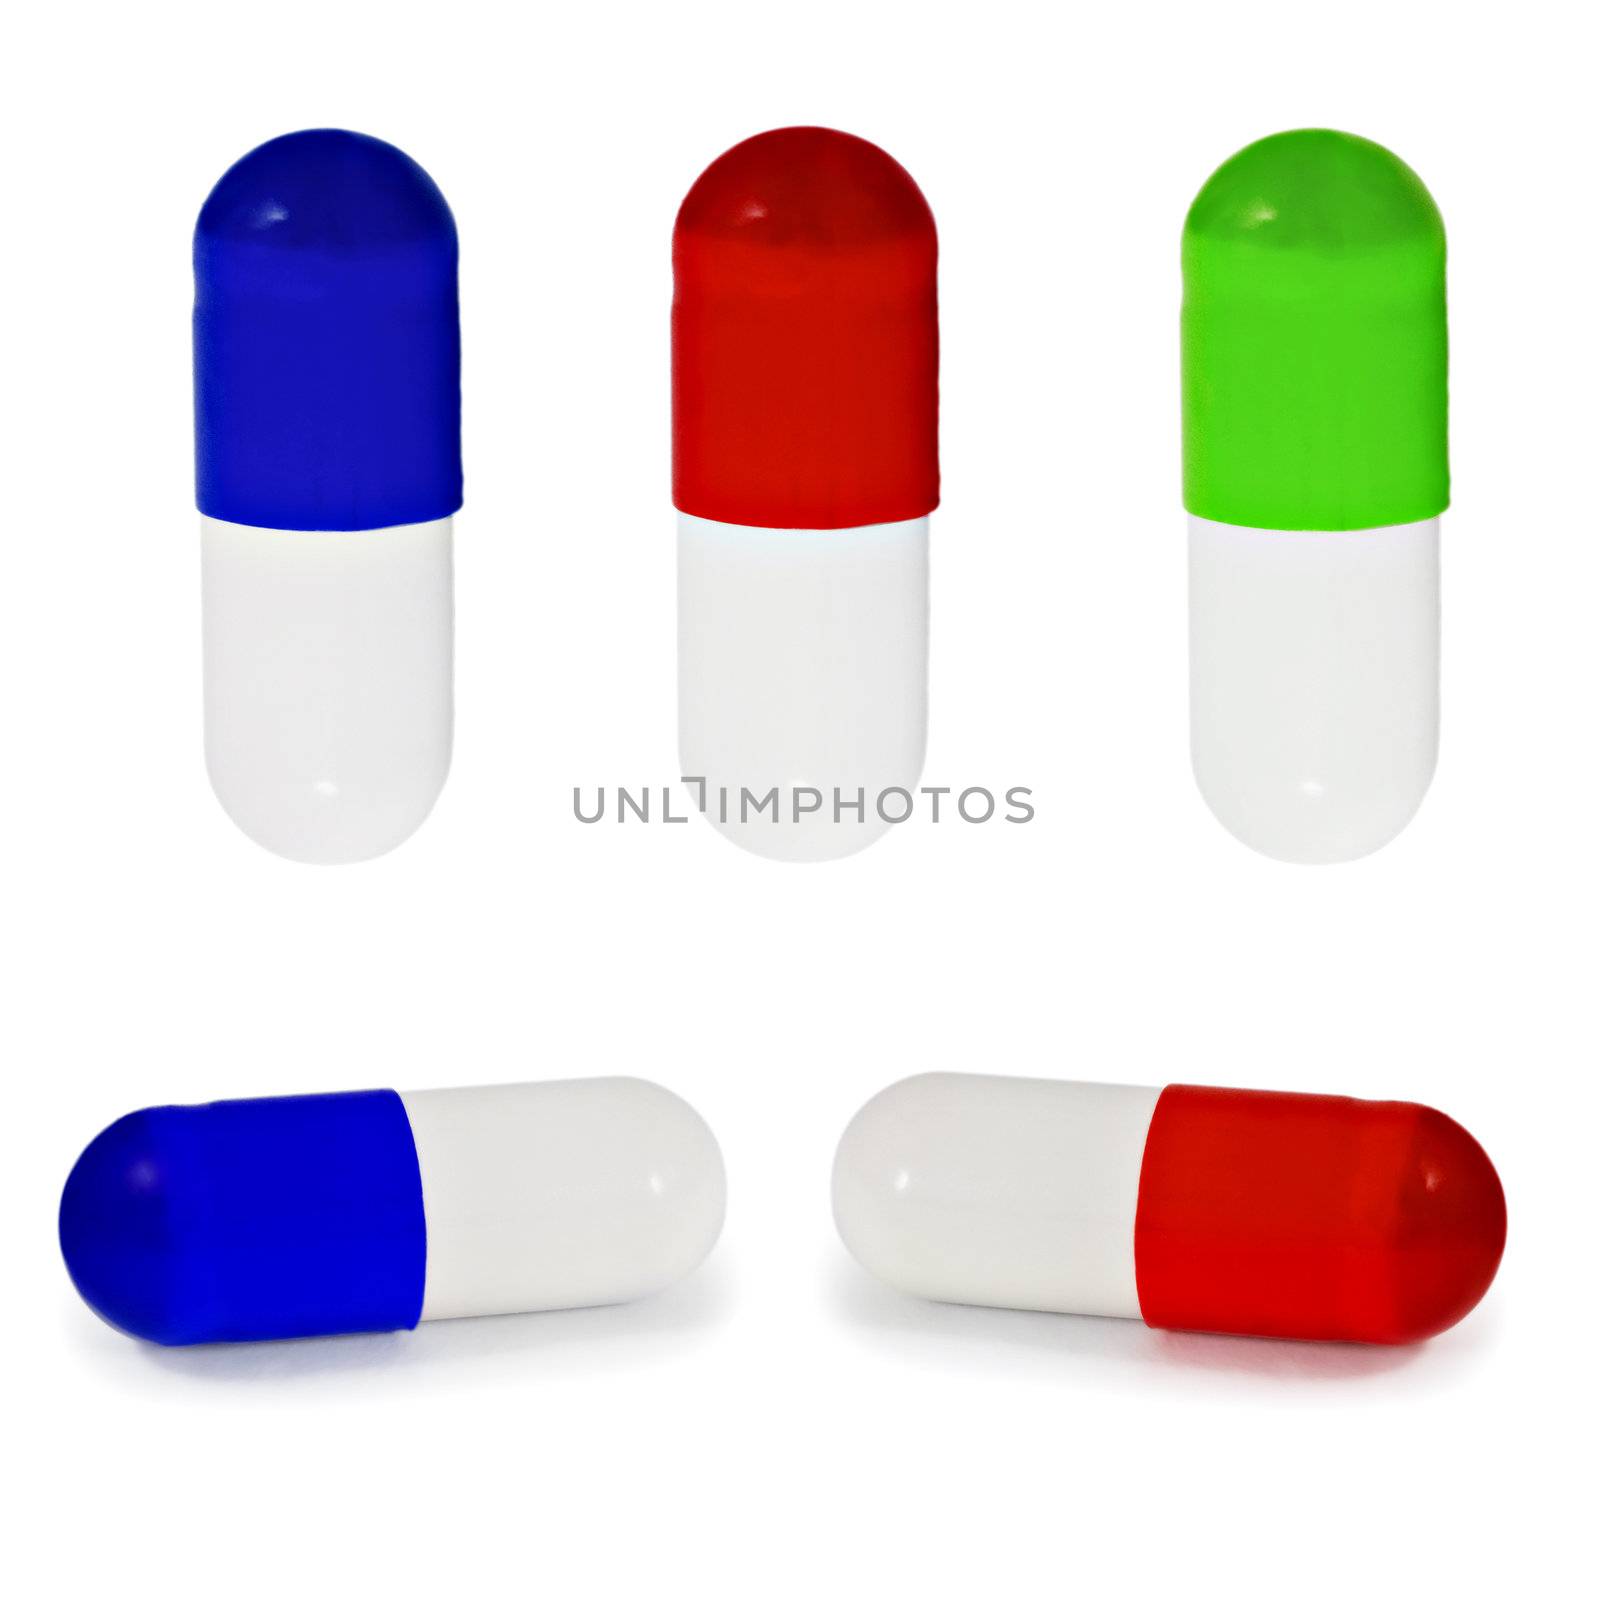 Colour capsules set isolated on white background